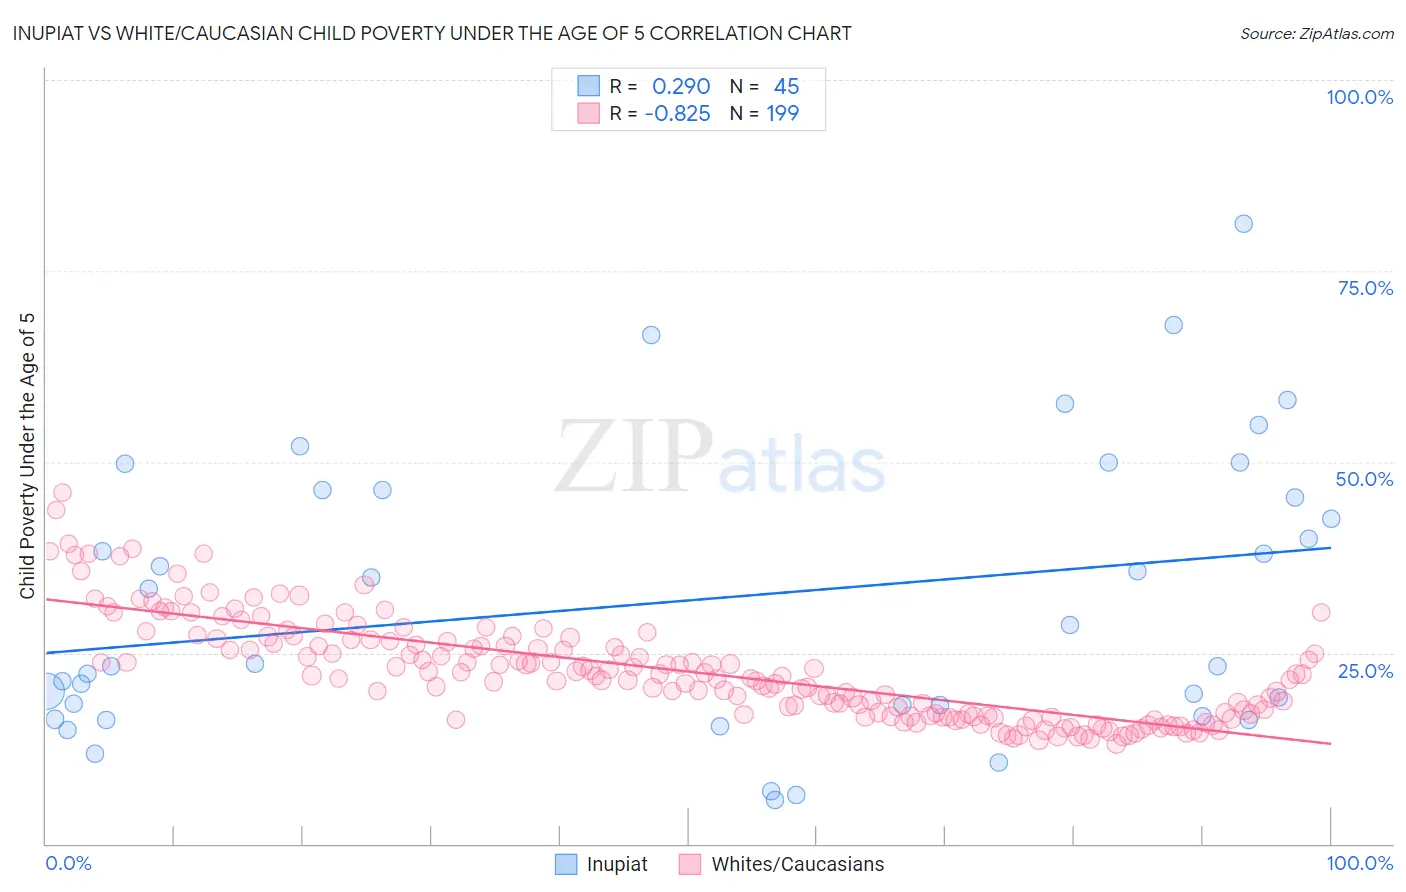 Inupiat vs White/Caucasian Child Poverty Under the Age of 5